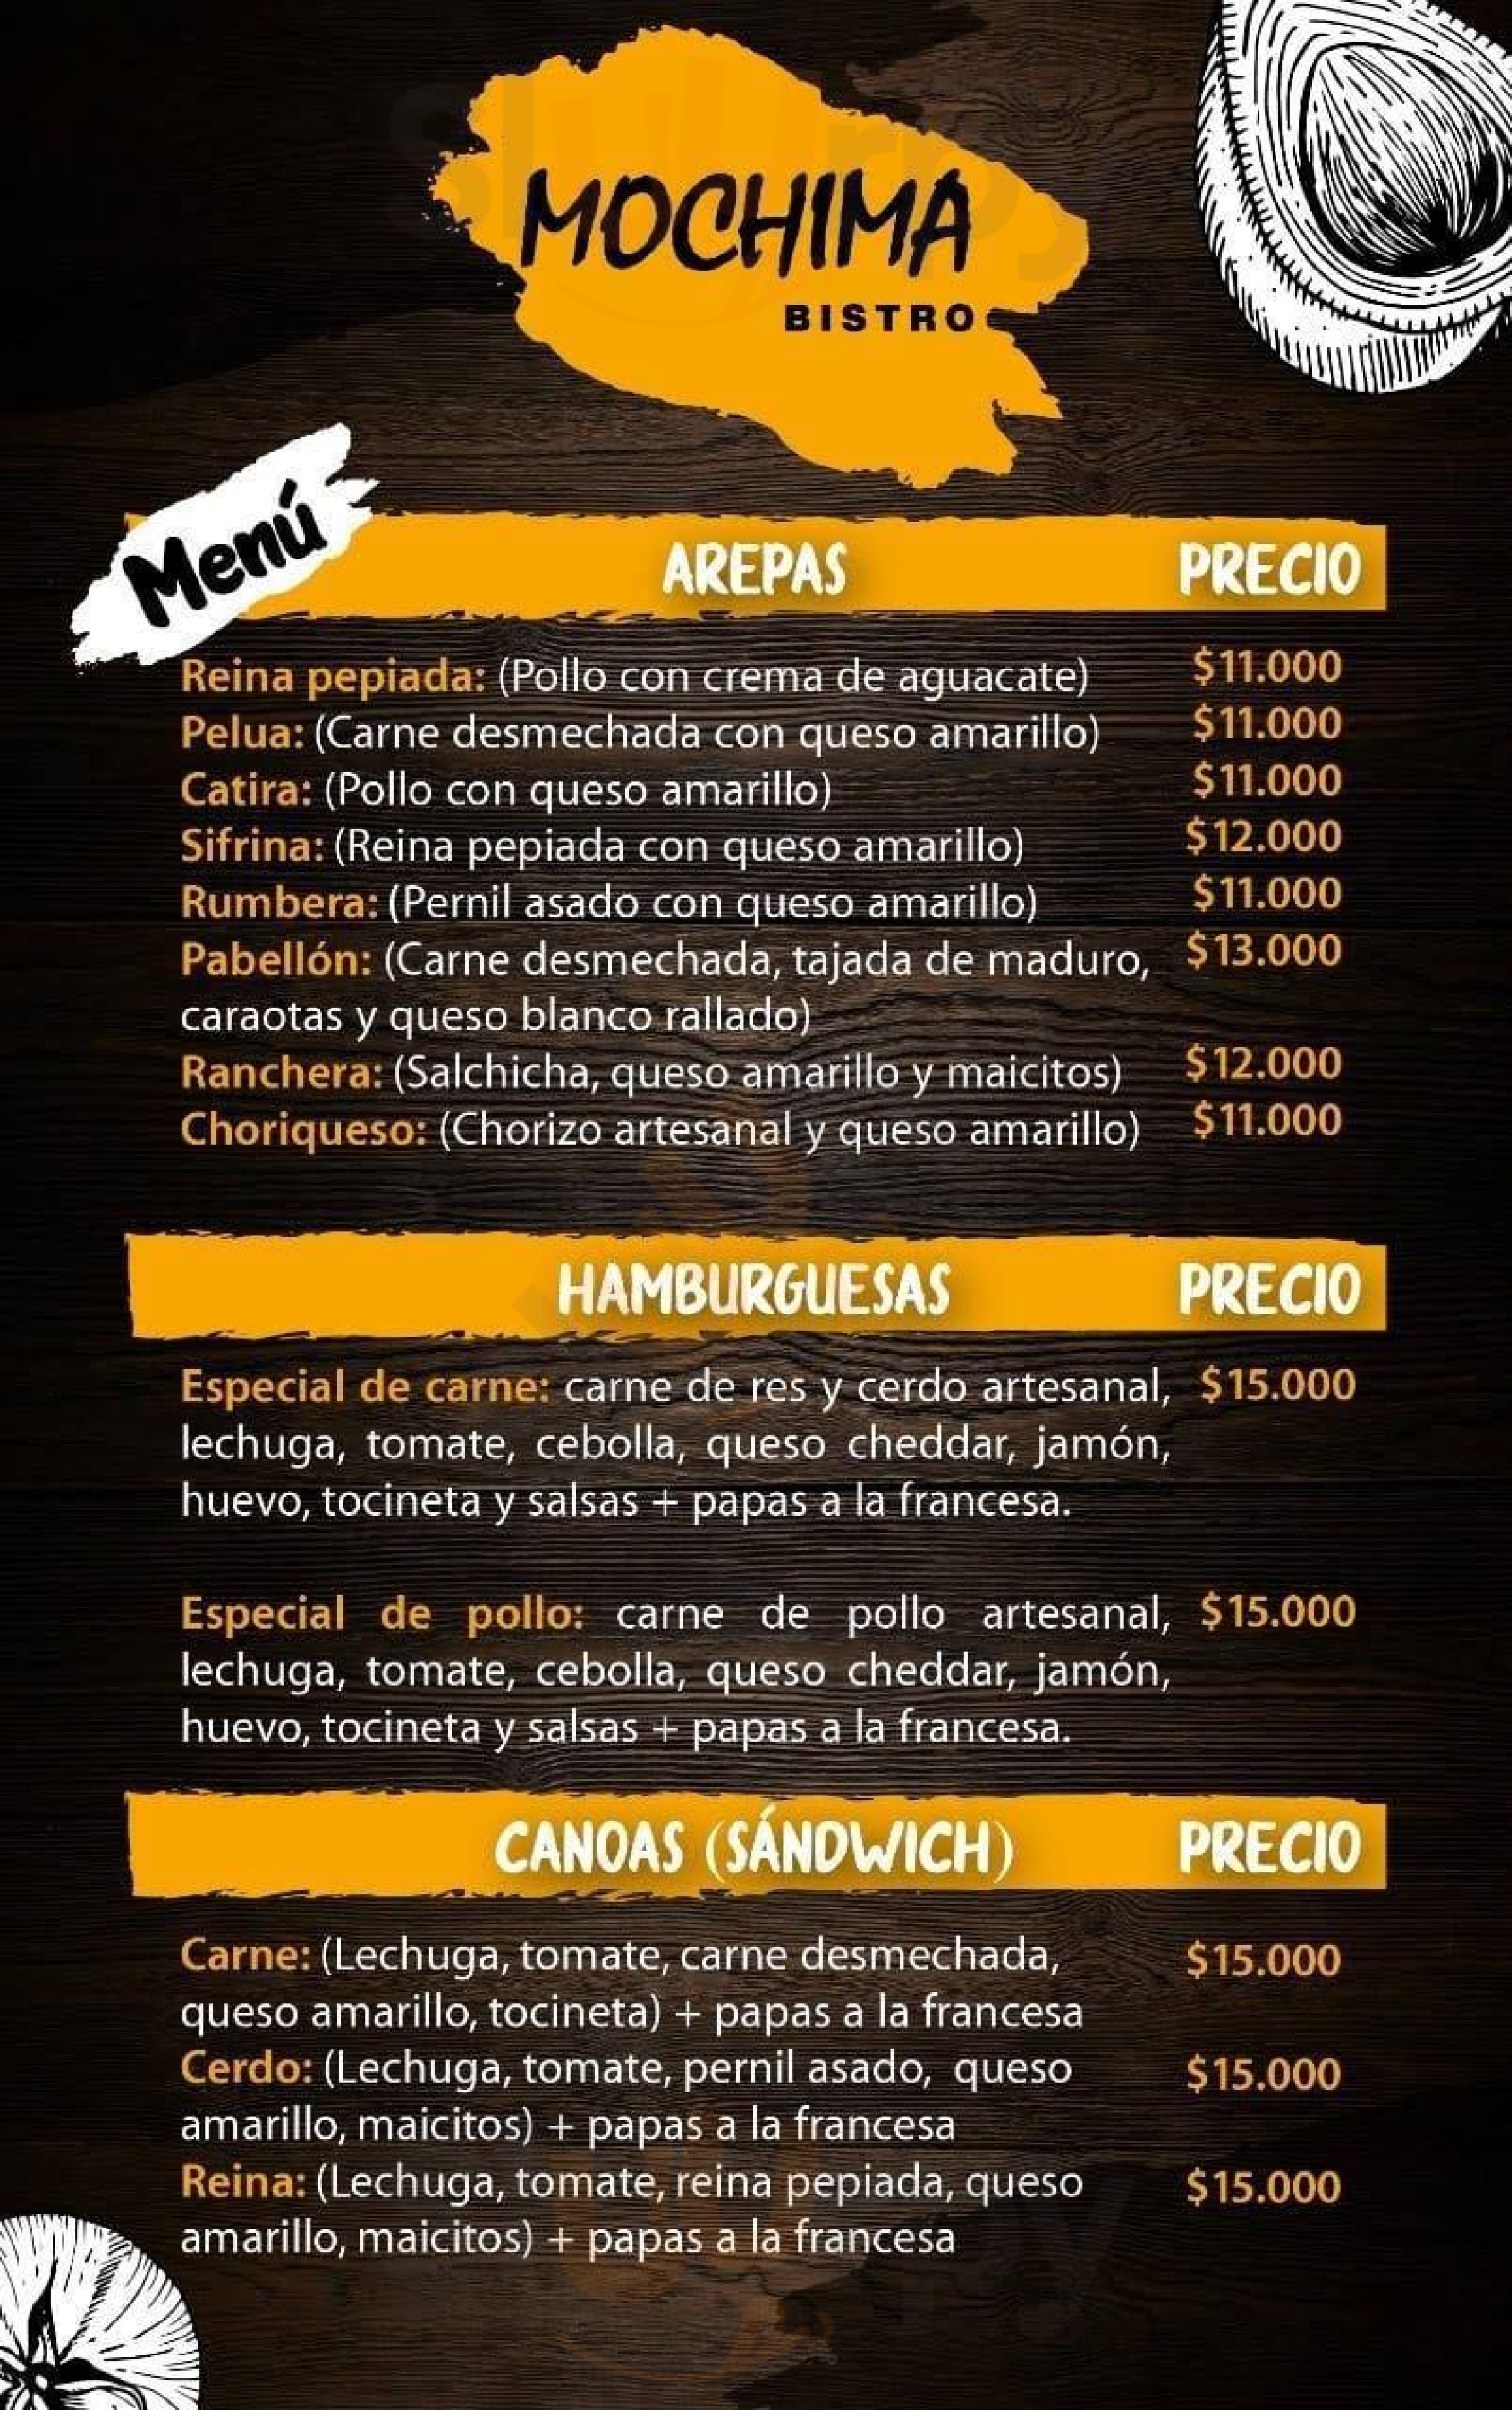 Mochima Bistro Medellín Menu - 1